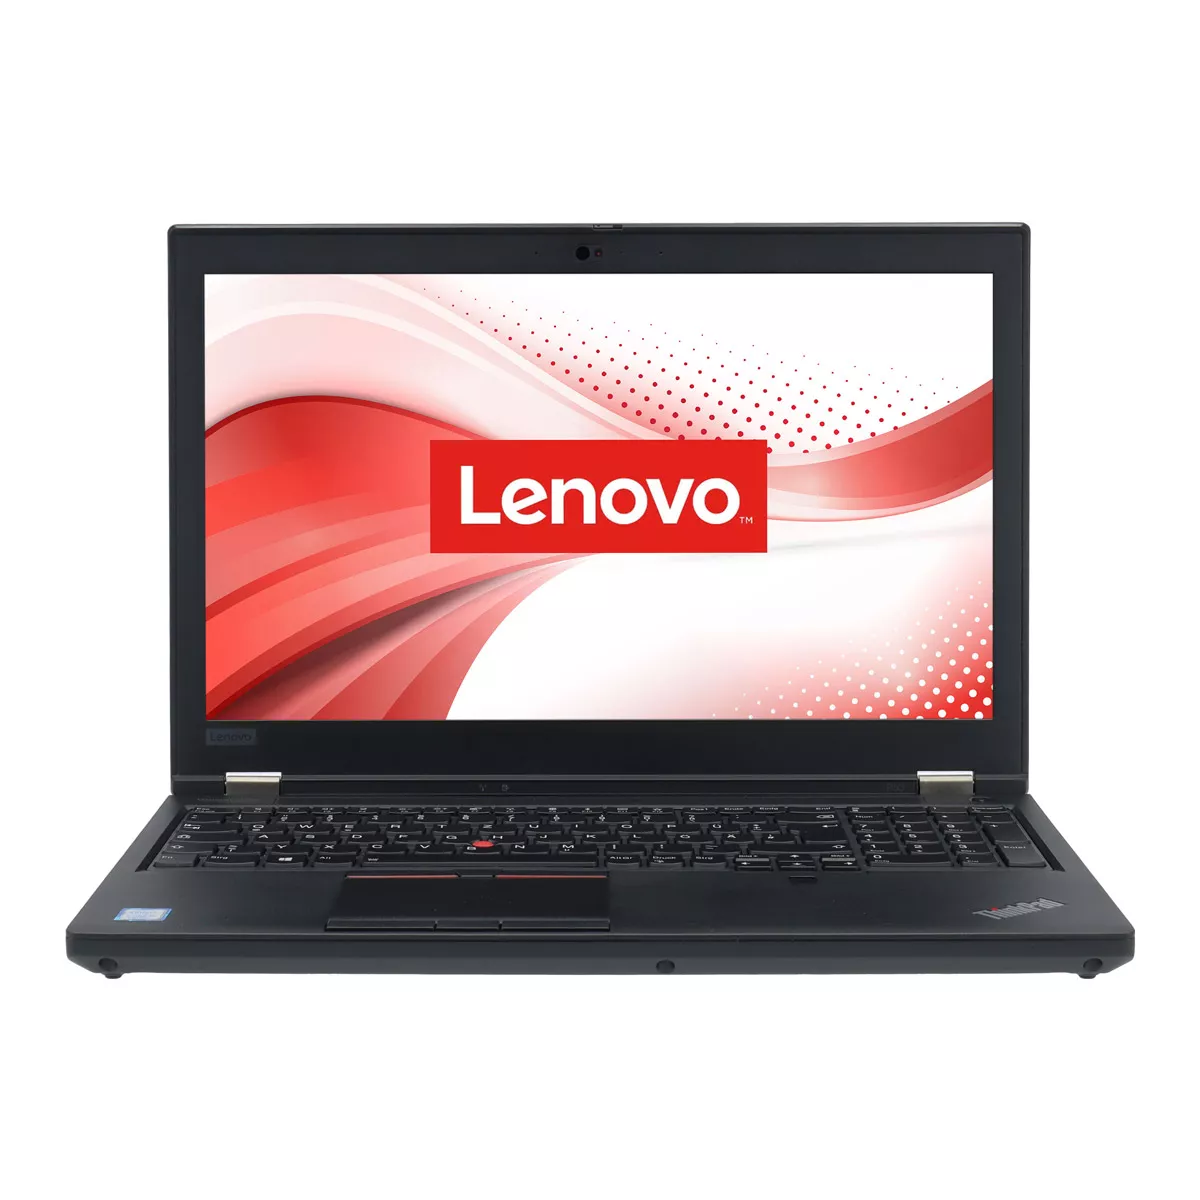 Lenovo ThinkPad P53 Core i7 9850H nVidia Quadro RTX 3000 32 GB 500 GB M.2 nVME SSD Webcam A+